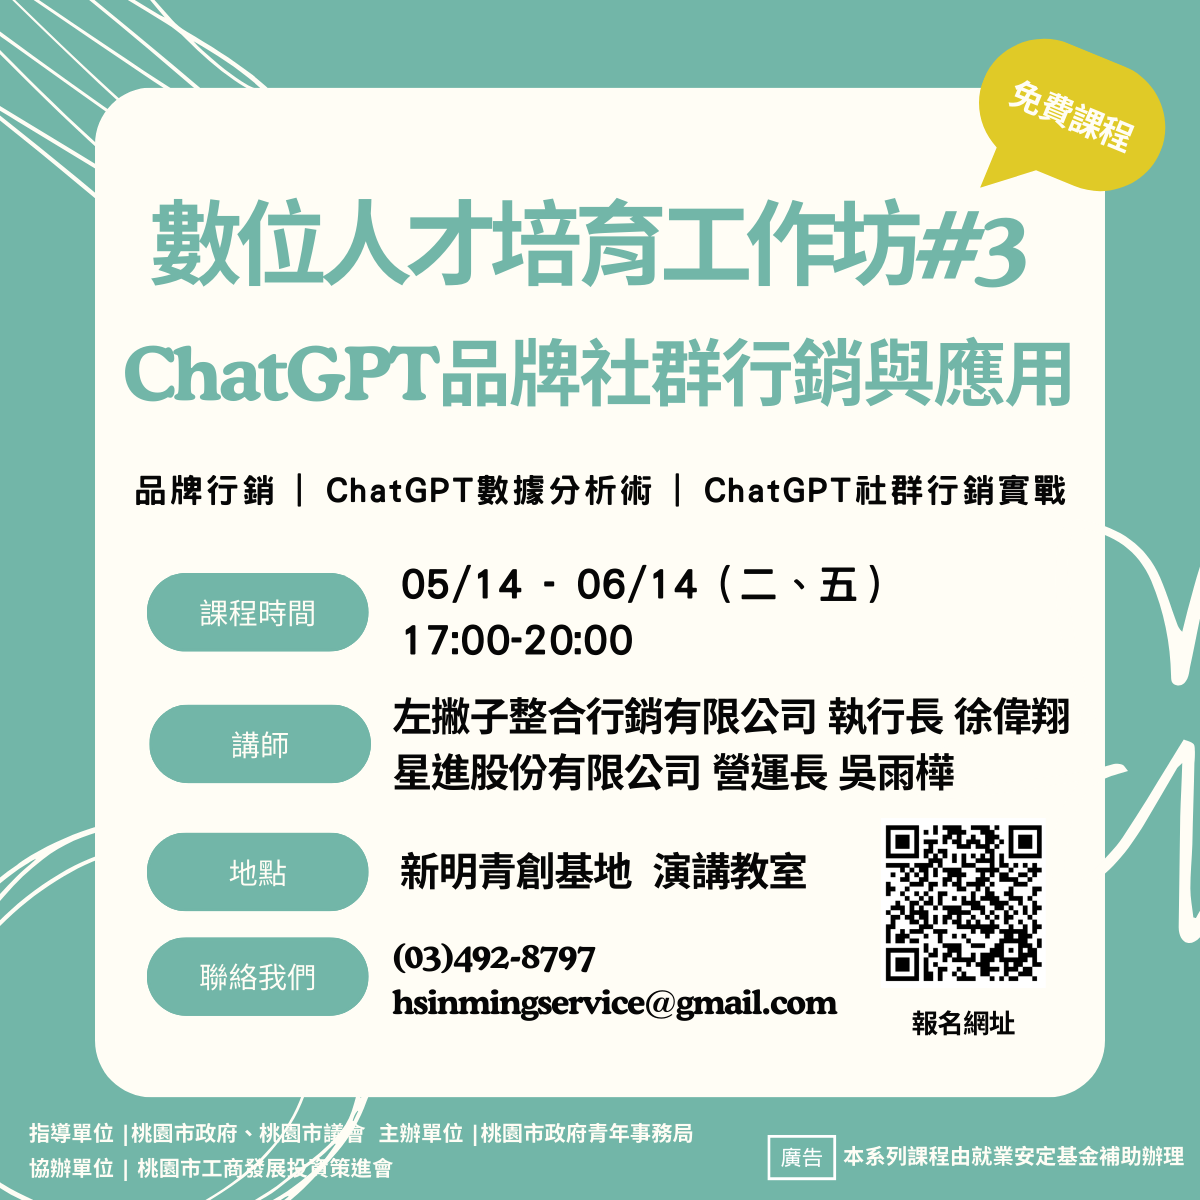 ChatGPT品牌社群行銷與應用 (2)